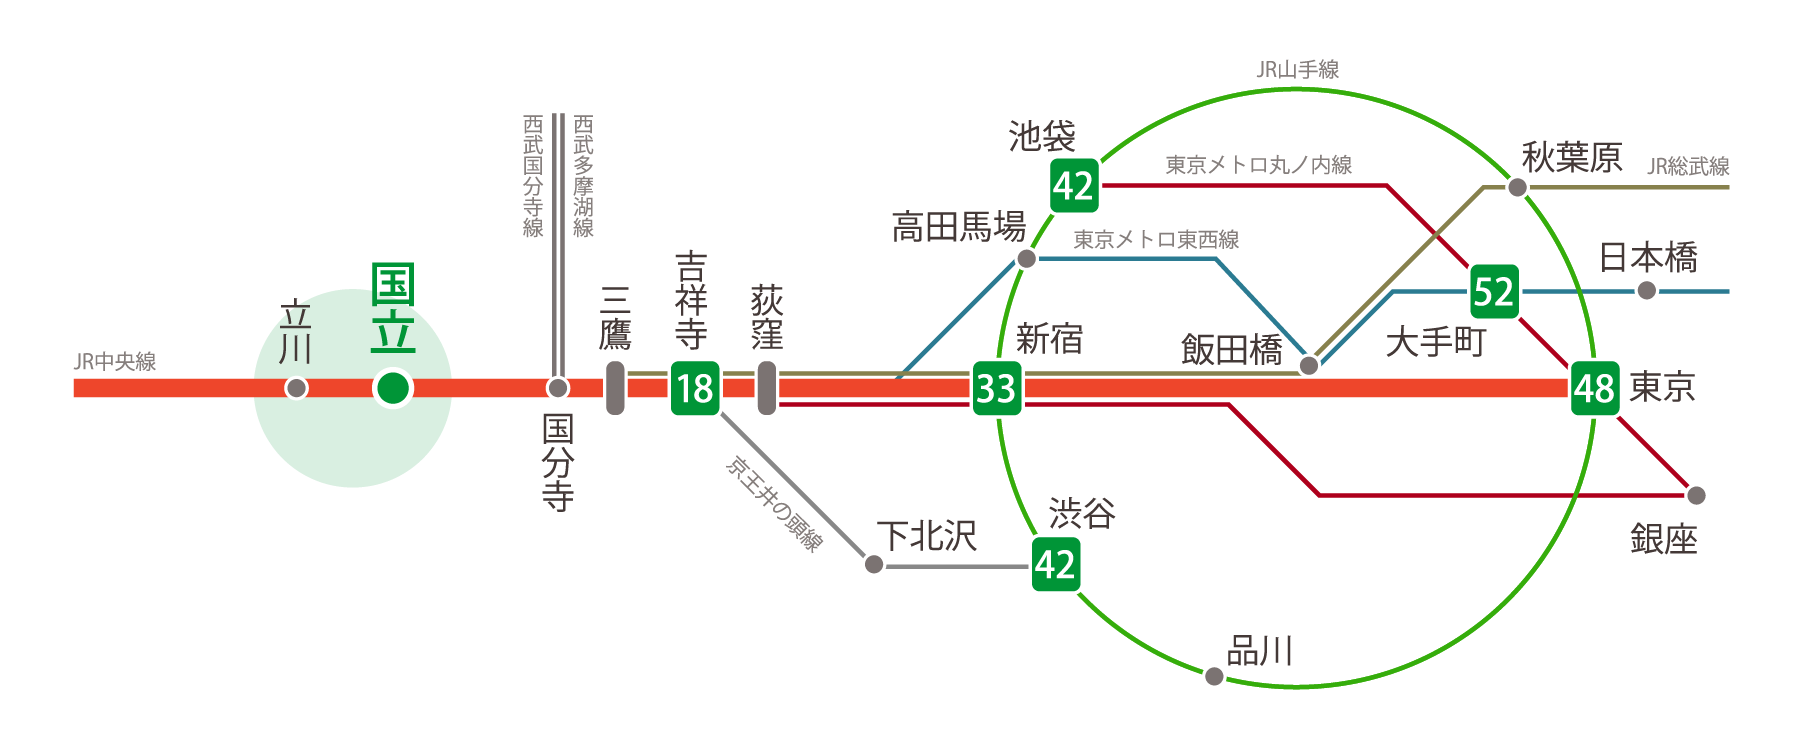 JR中央線「国立」駅からの所要時間